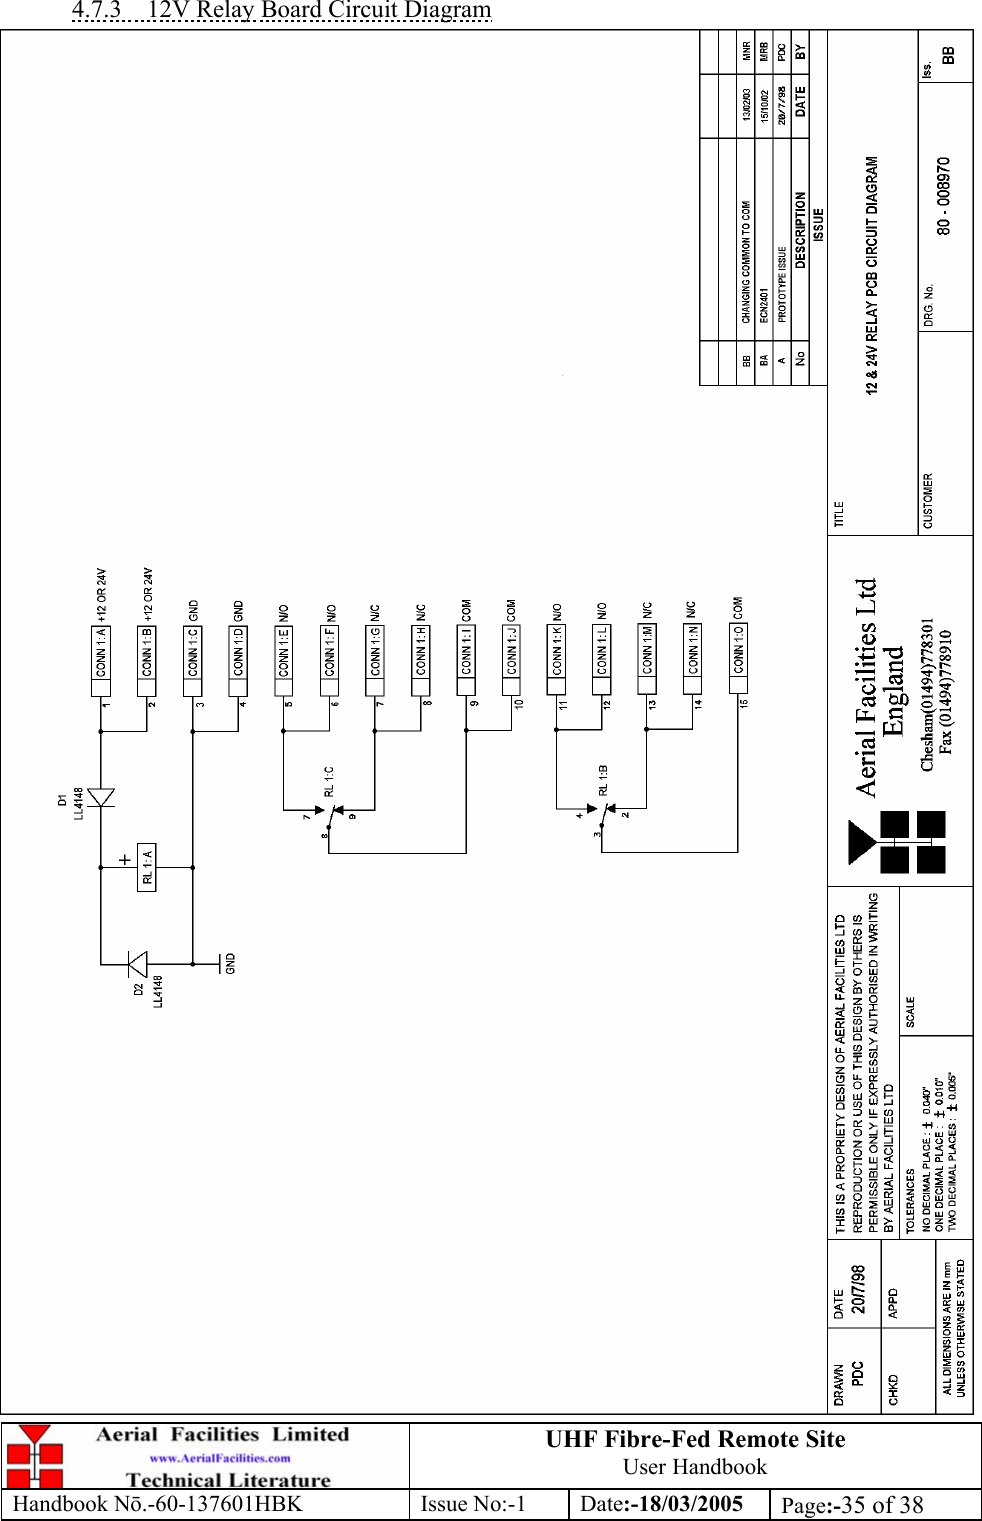 UHF Fibre-Fed Remote Site User Handbook Handbook N.-60-137601HBK Issue No:-1 Date:-18/03/2005  Page:-35 of 38  4.7.3  12V Relay Board Circuit Diagram  